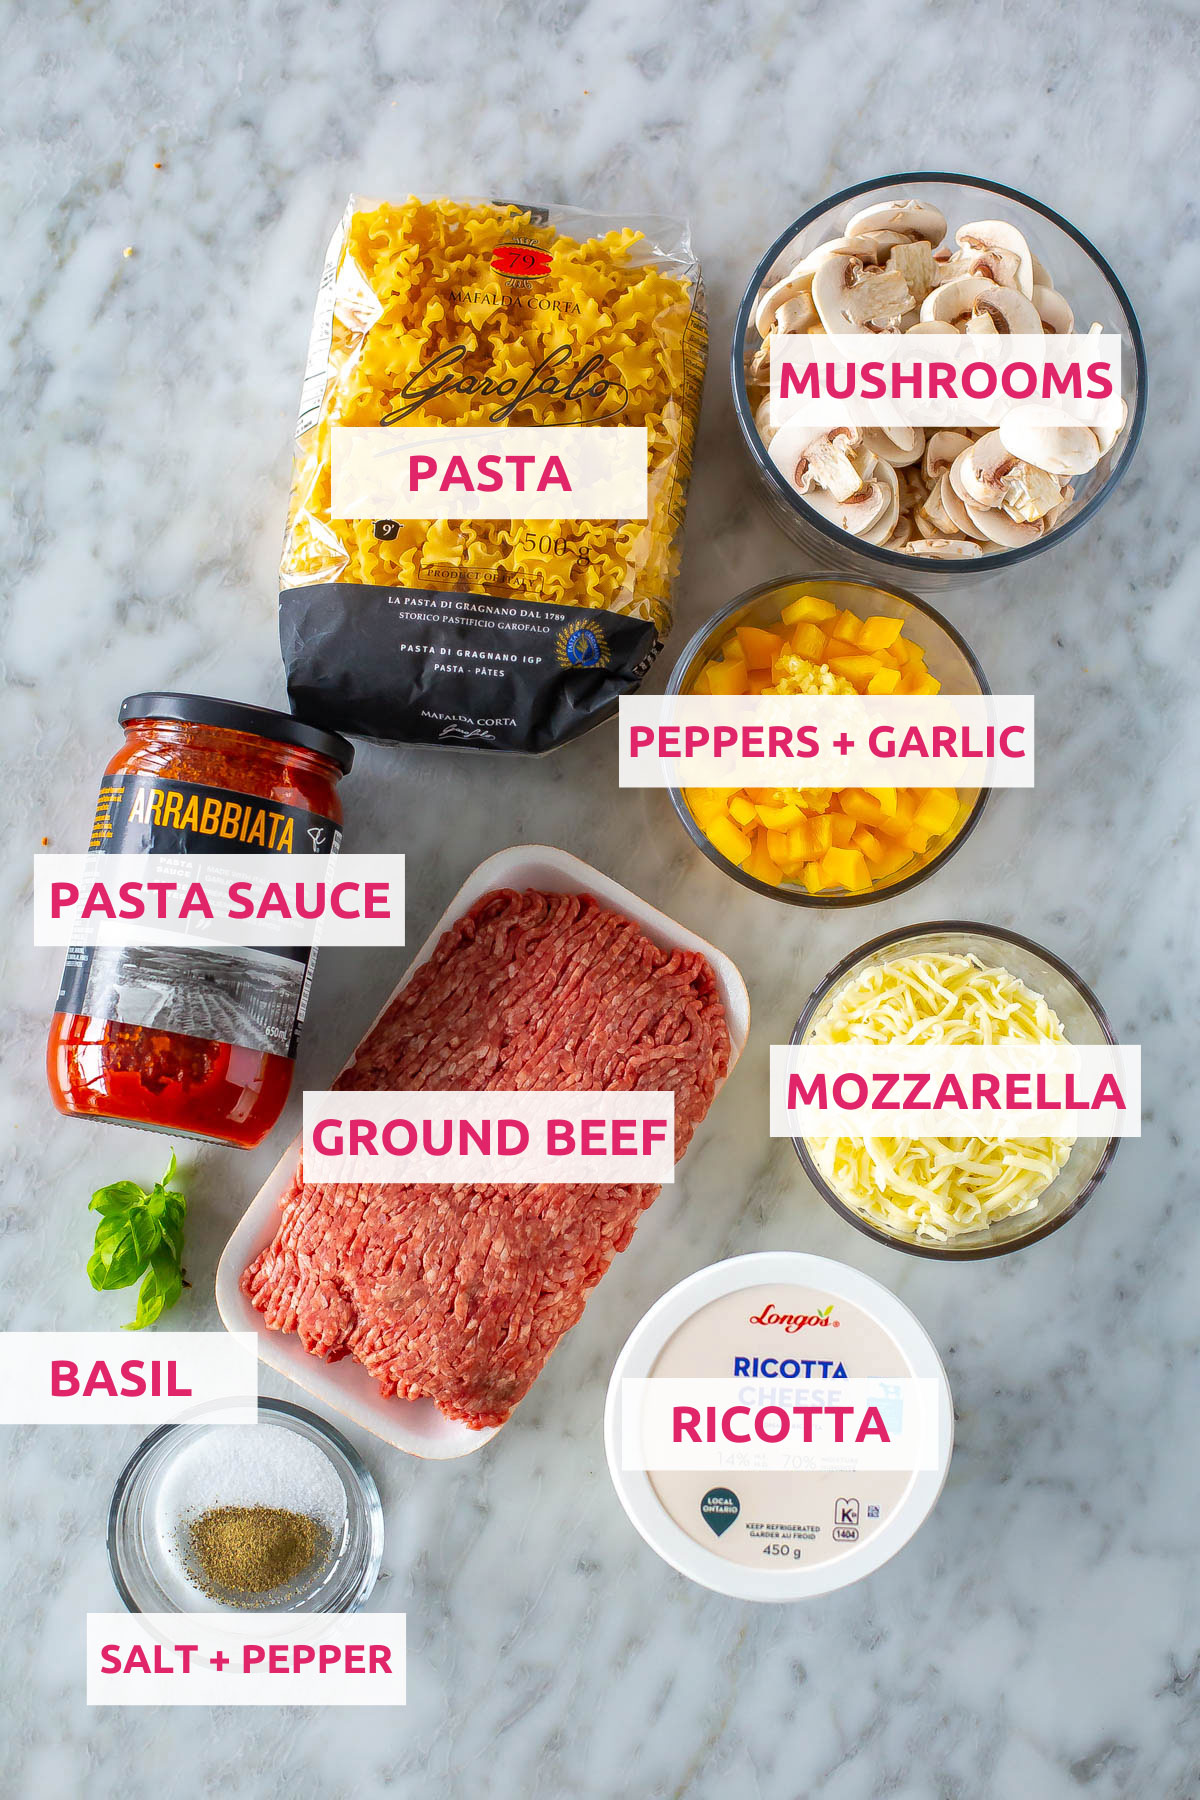 Ingredients for skillet lasagna: pasta, mushrooms, pasta sauce, peppers, garlic, ground beef, mozzarella, ricotta, salt and pepper.